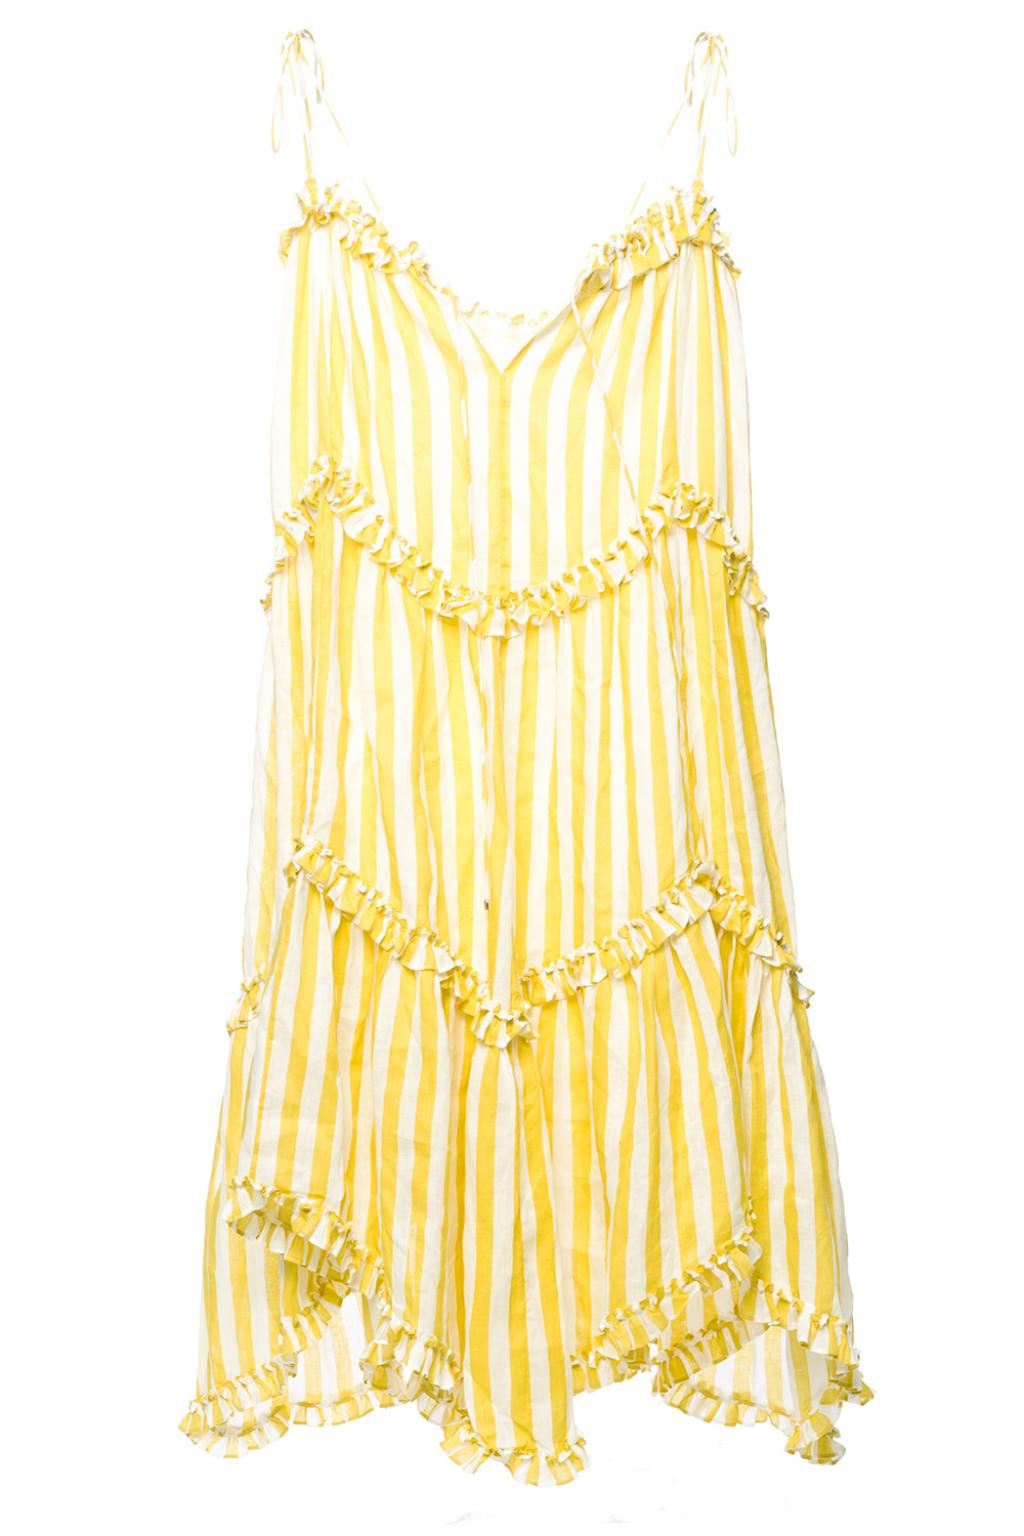 zimmermann yellow stripe dress